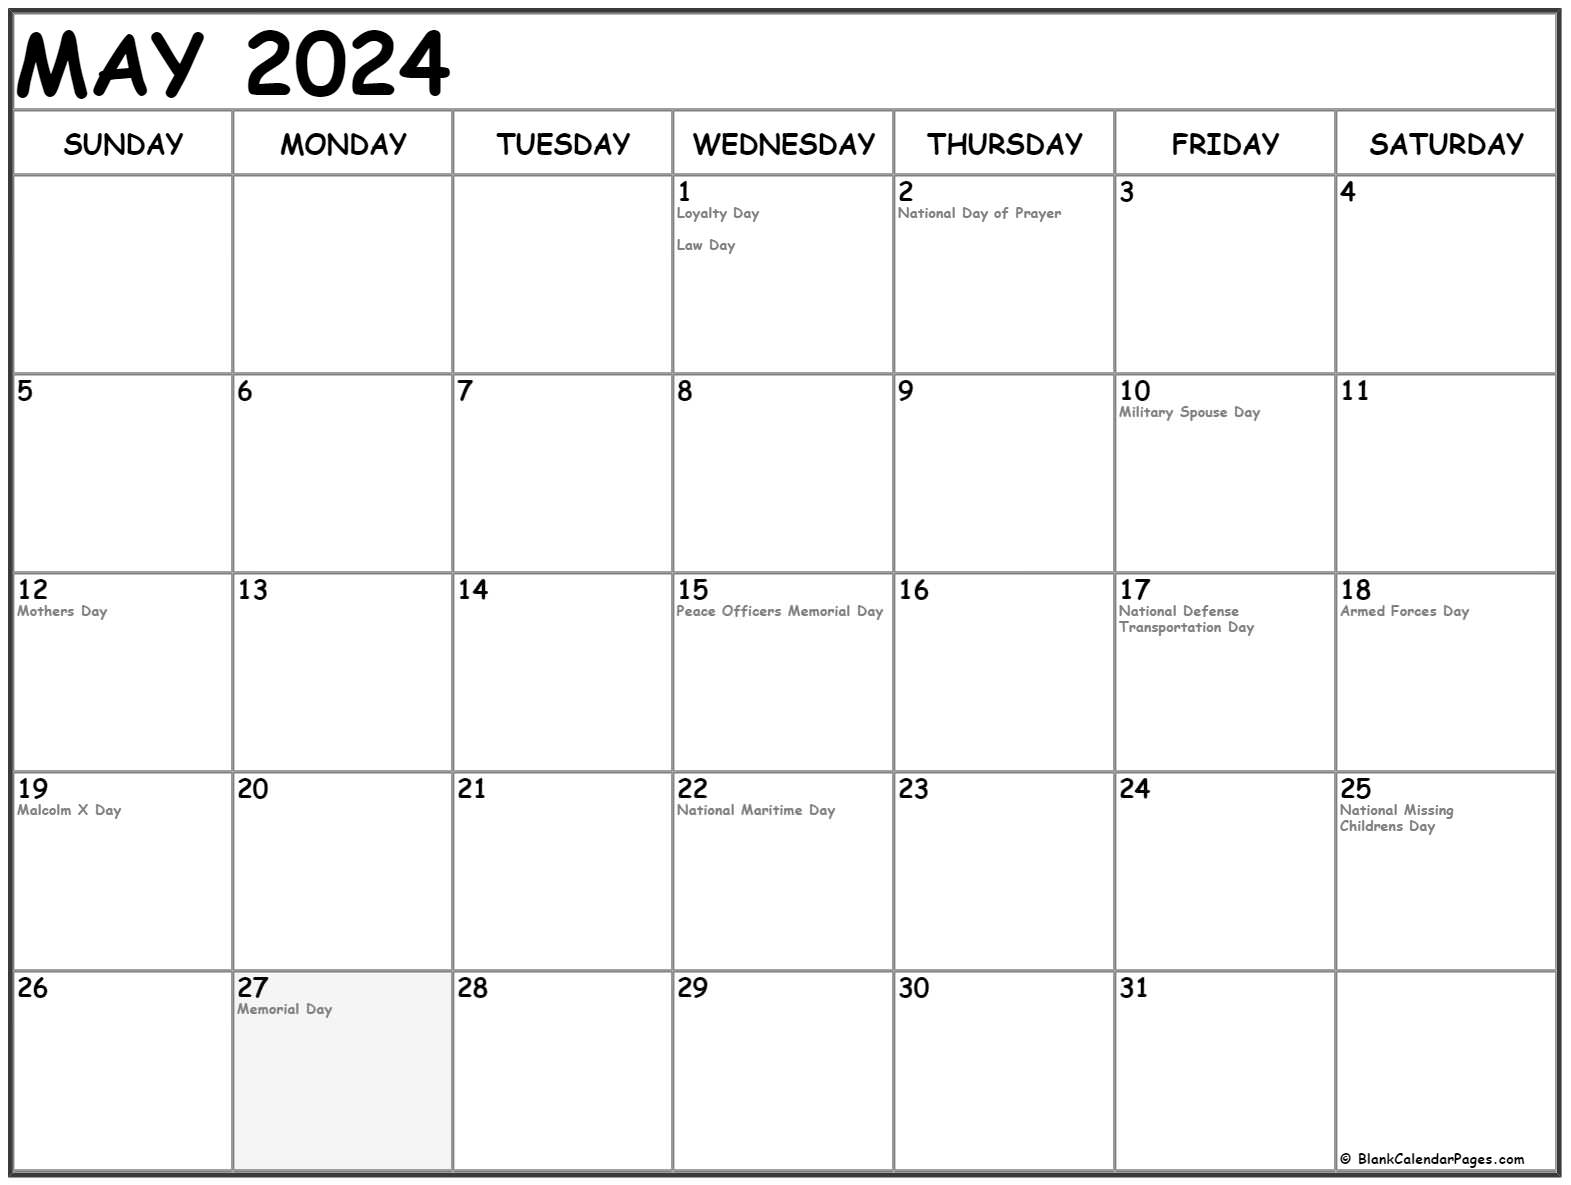 2024 May Holidays and Observances - May Calendar of Holidays